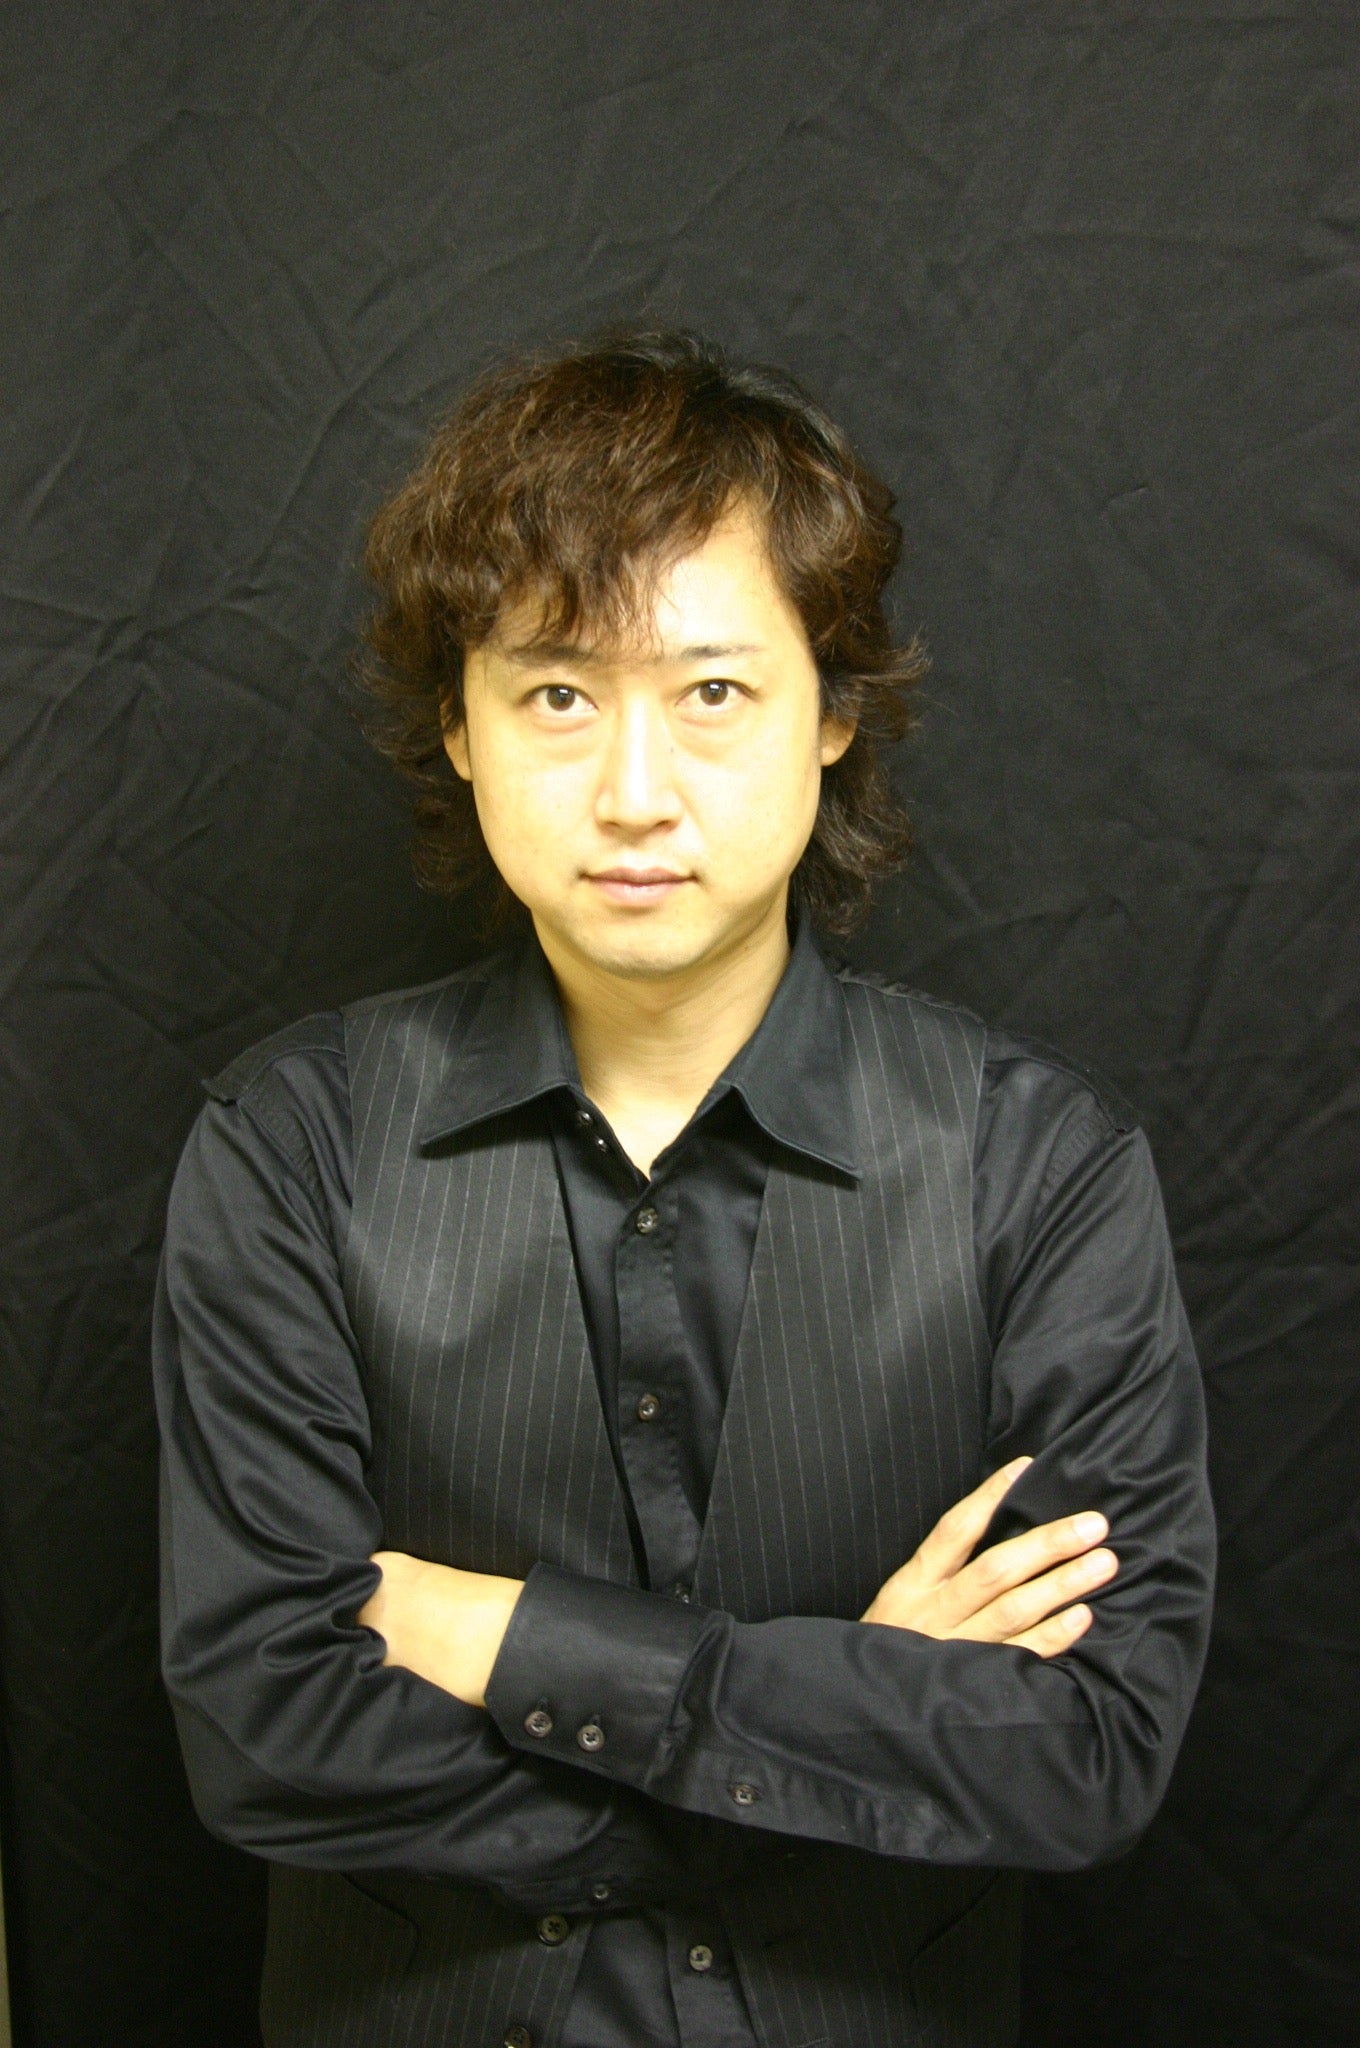 Gクレフ Golden Balls 渡辺剛のブログ Violinist Tsuyoshi Watanabe